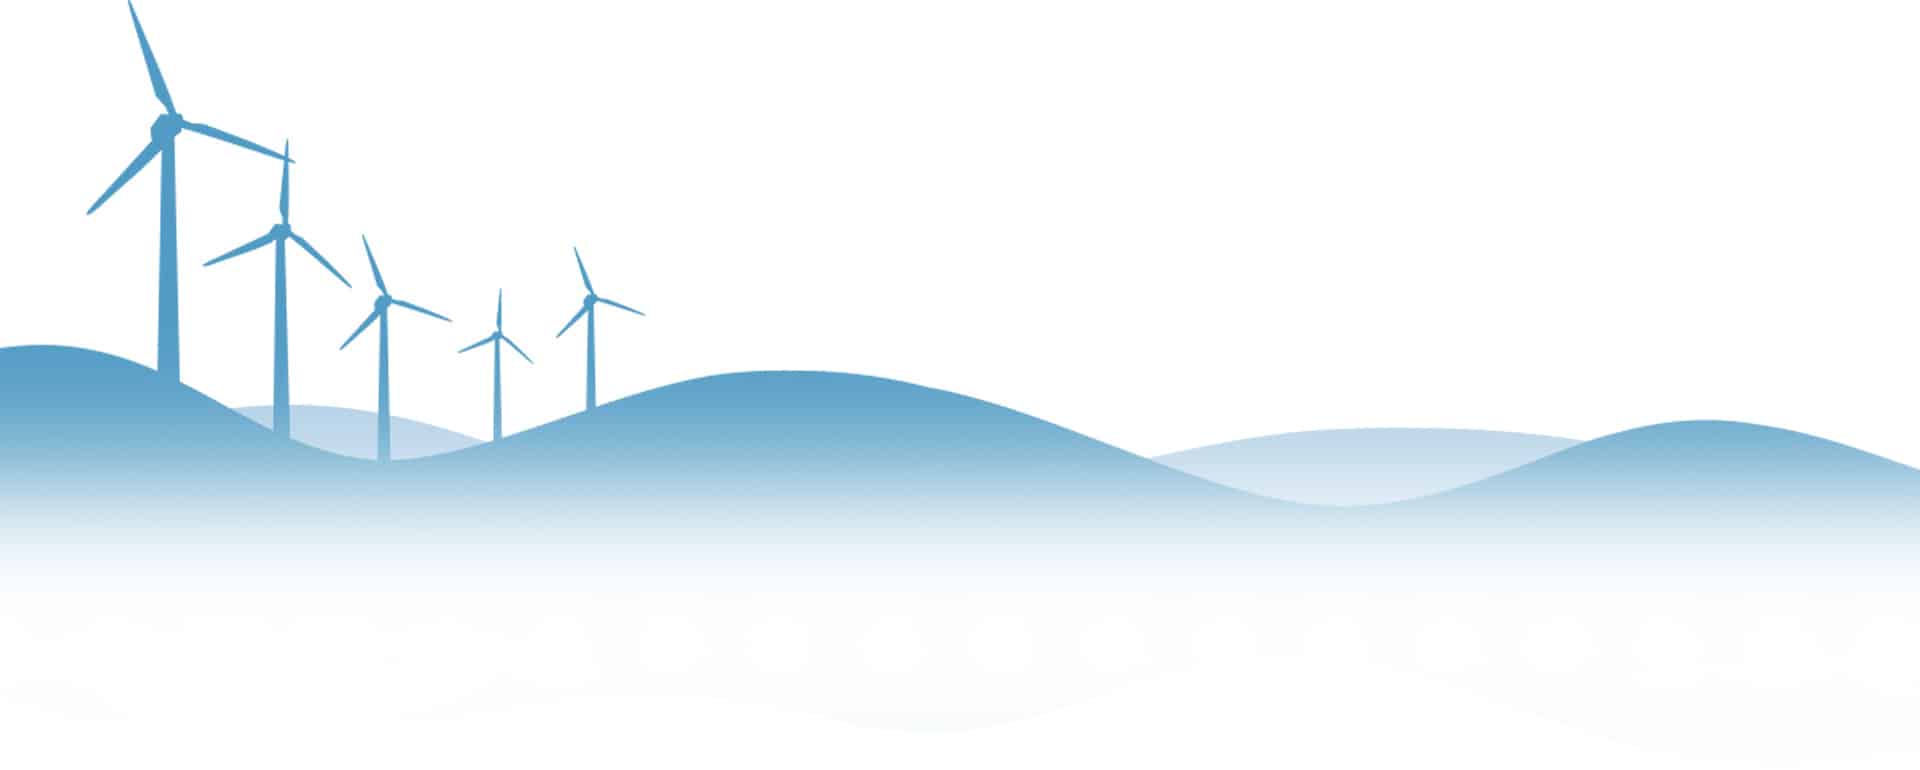 Background Wind Turbine graphic